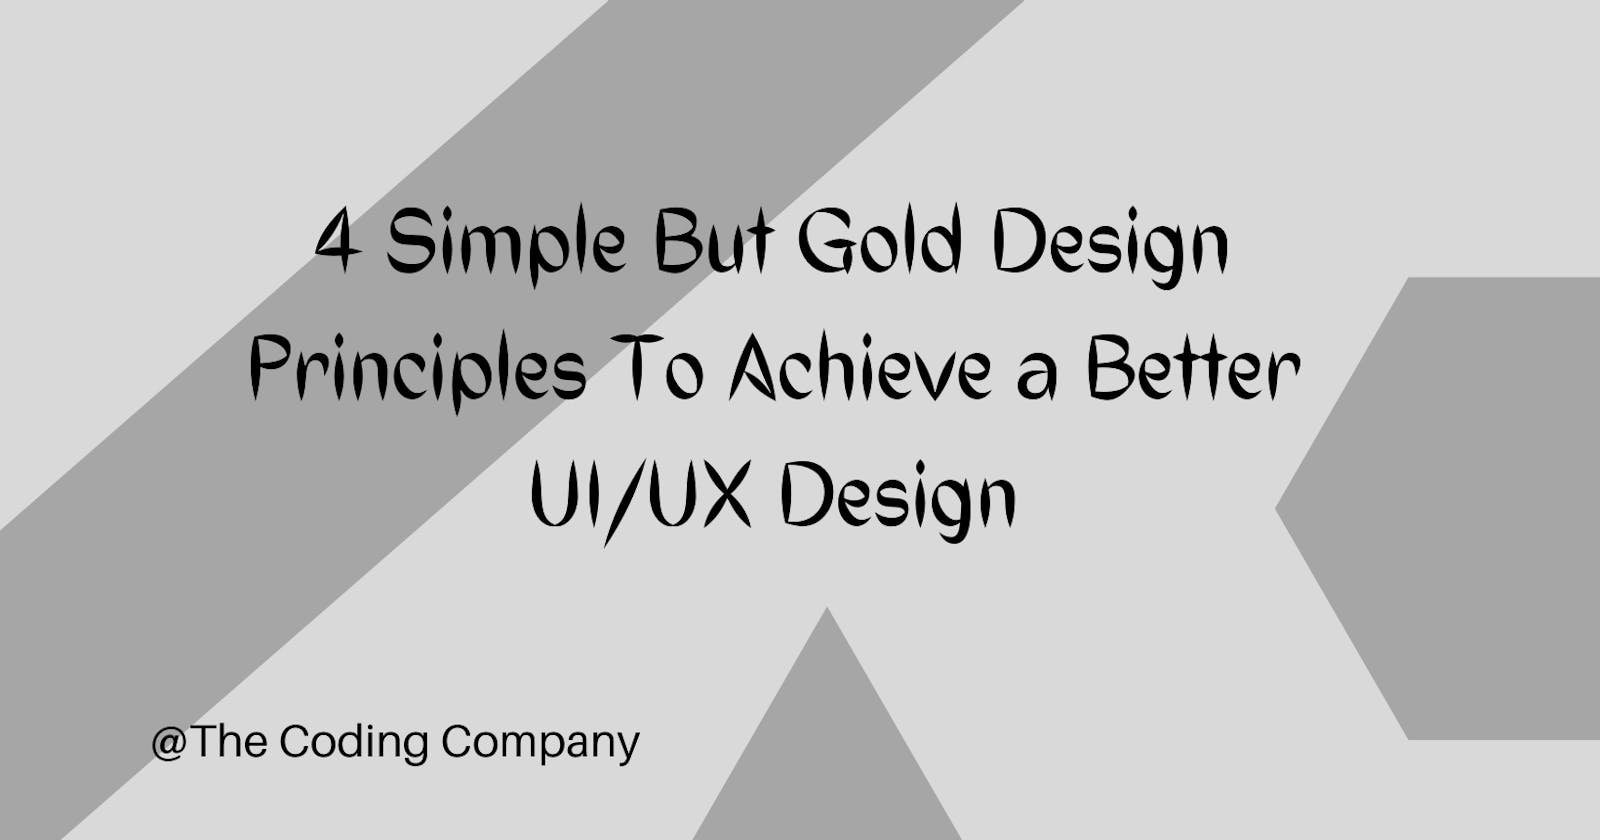 Design Principles To Achieve a Better UI/UX Design